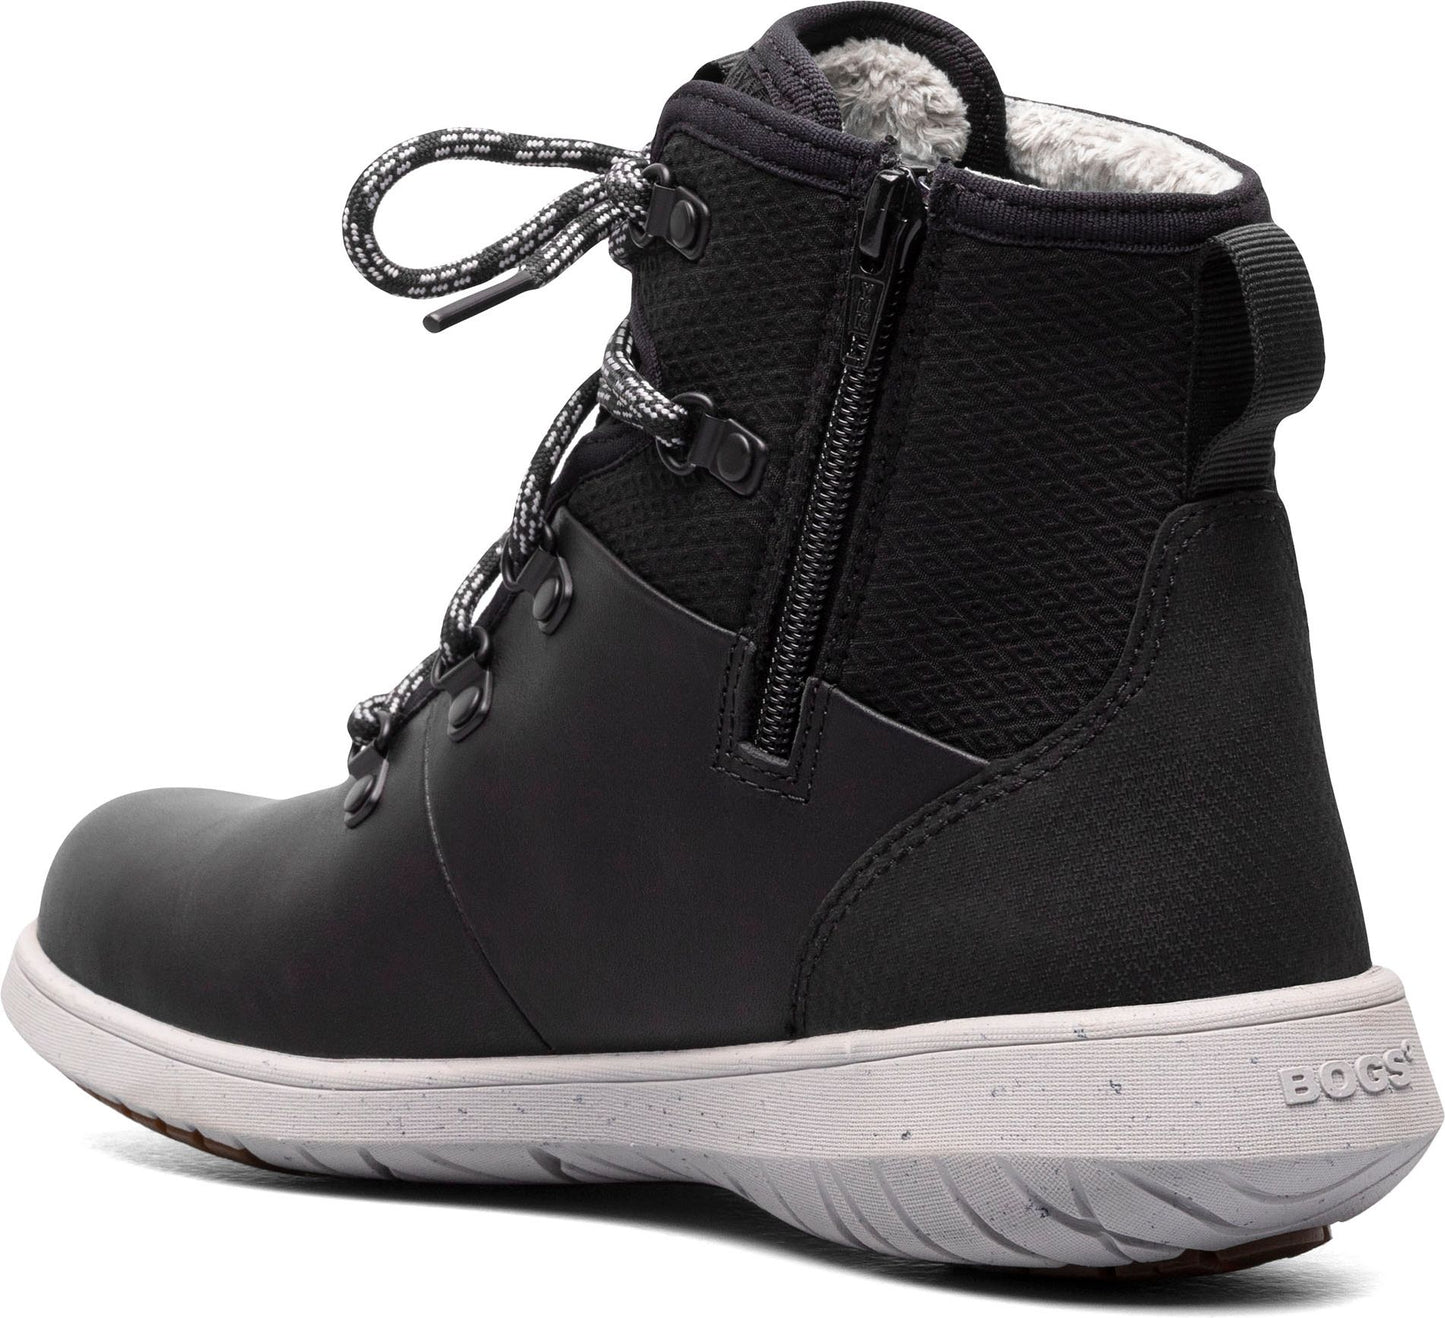 BOGS Boots Juniper Hiker Insulated Black